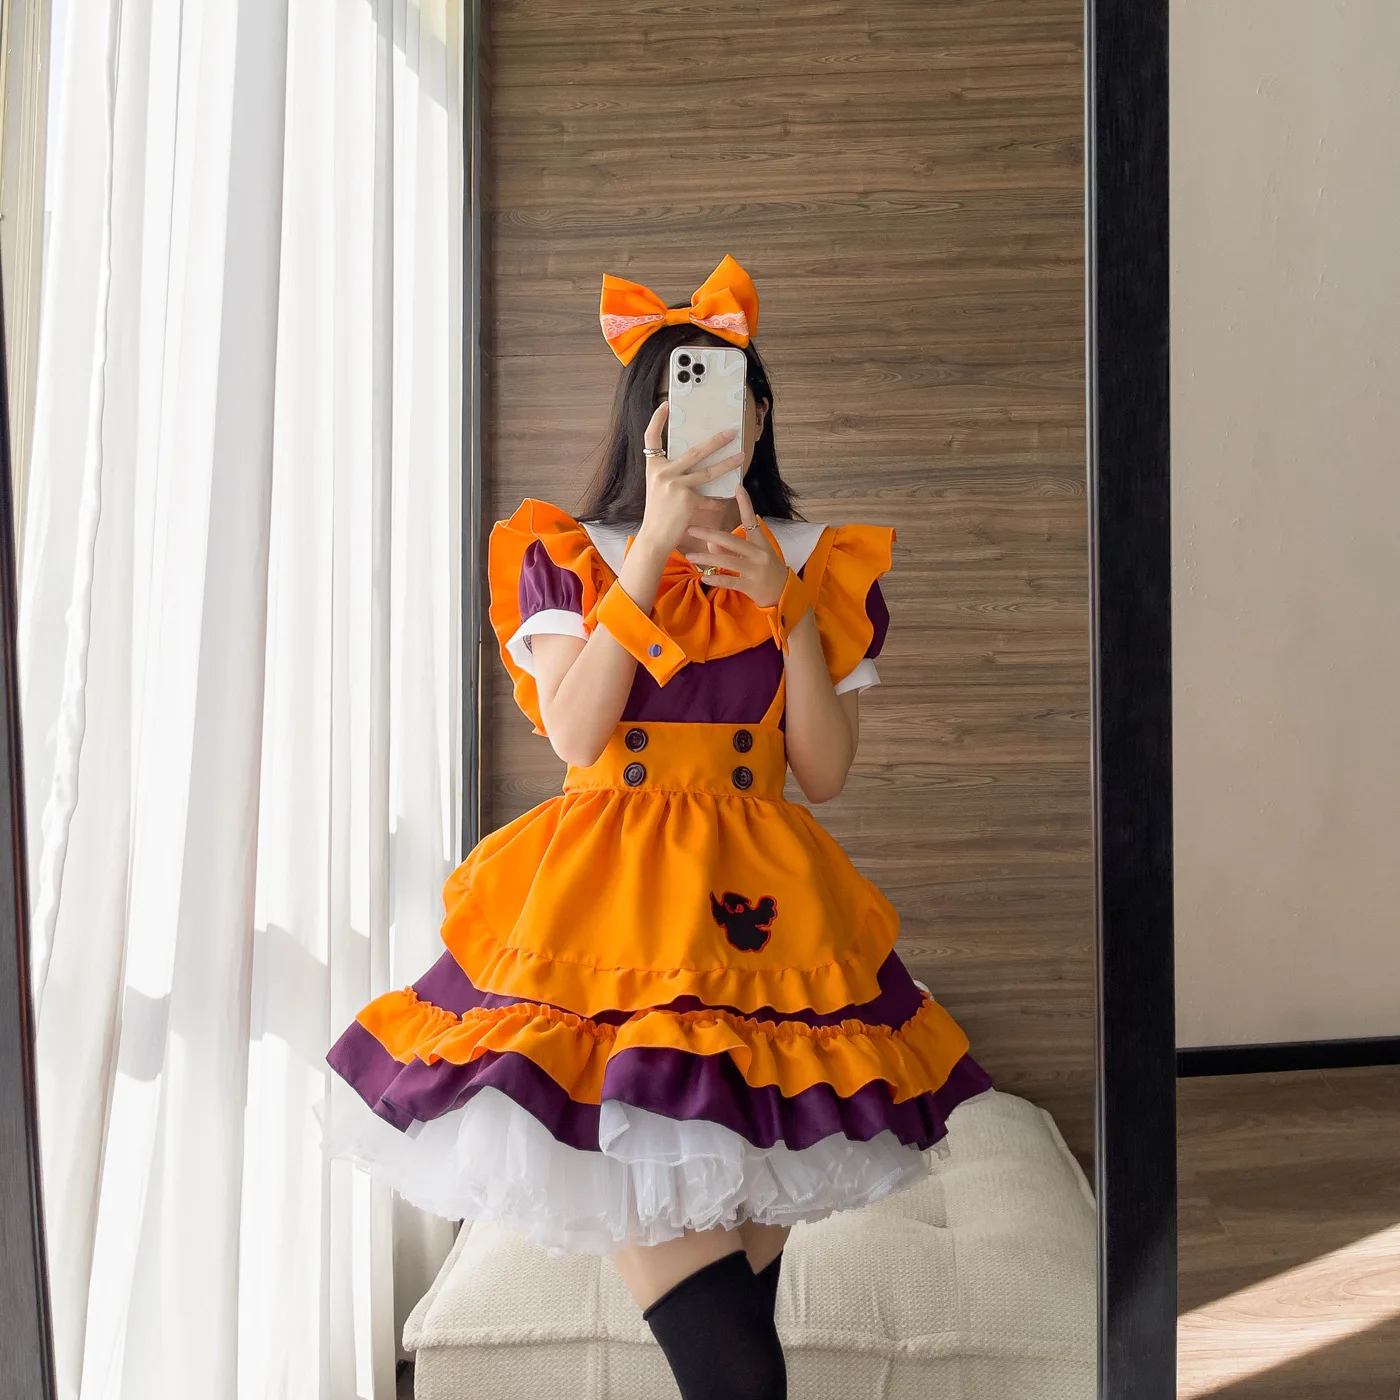 

Cosplay Bat Vampire Maid Cosplay Halloween Costumes Orange Retro Pumpkin Uniform Lolita Maid Dress Party Maid Role Play Outfits